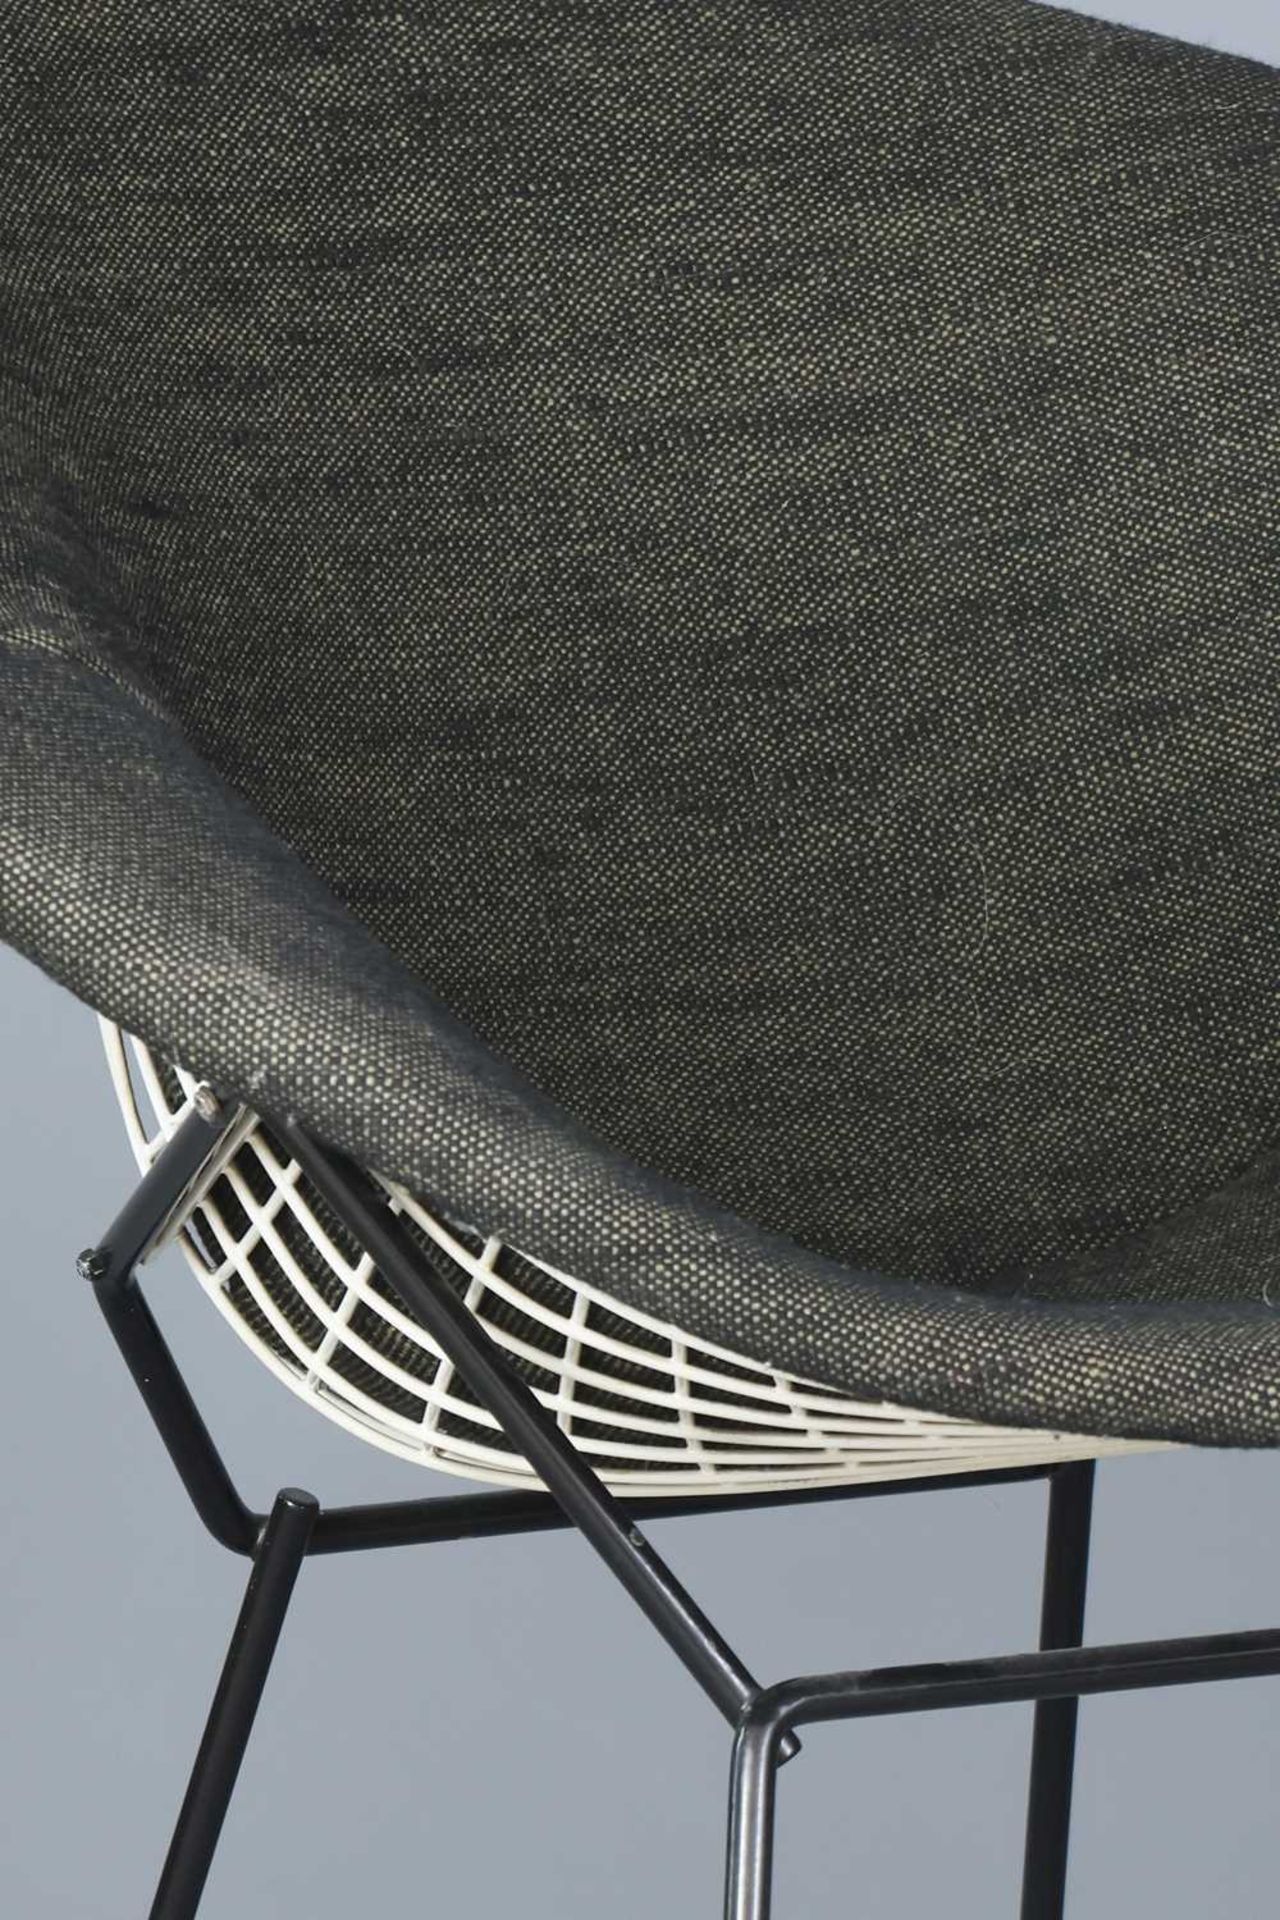 2 KNOLL INTERNATIONAL "Diamond Chair" Sessel - Image 3 of 3